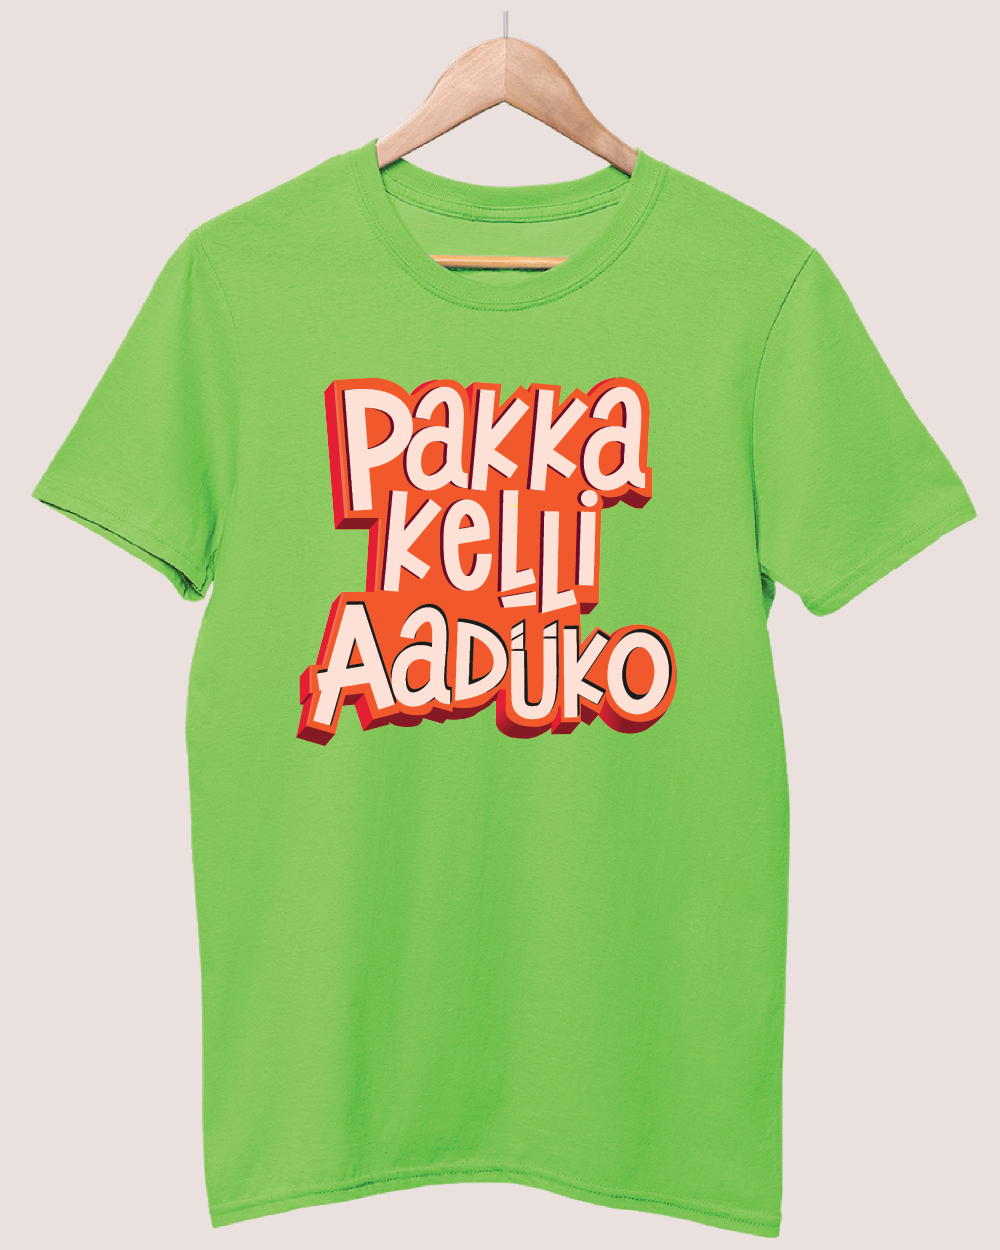 Pakkakelli aaduko T-shirt